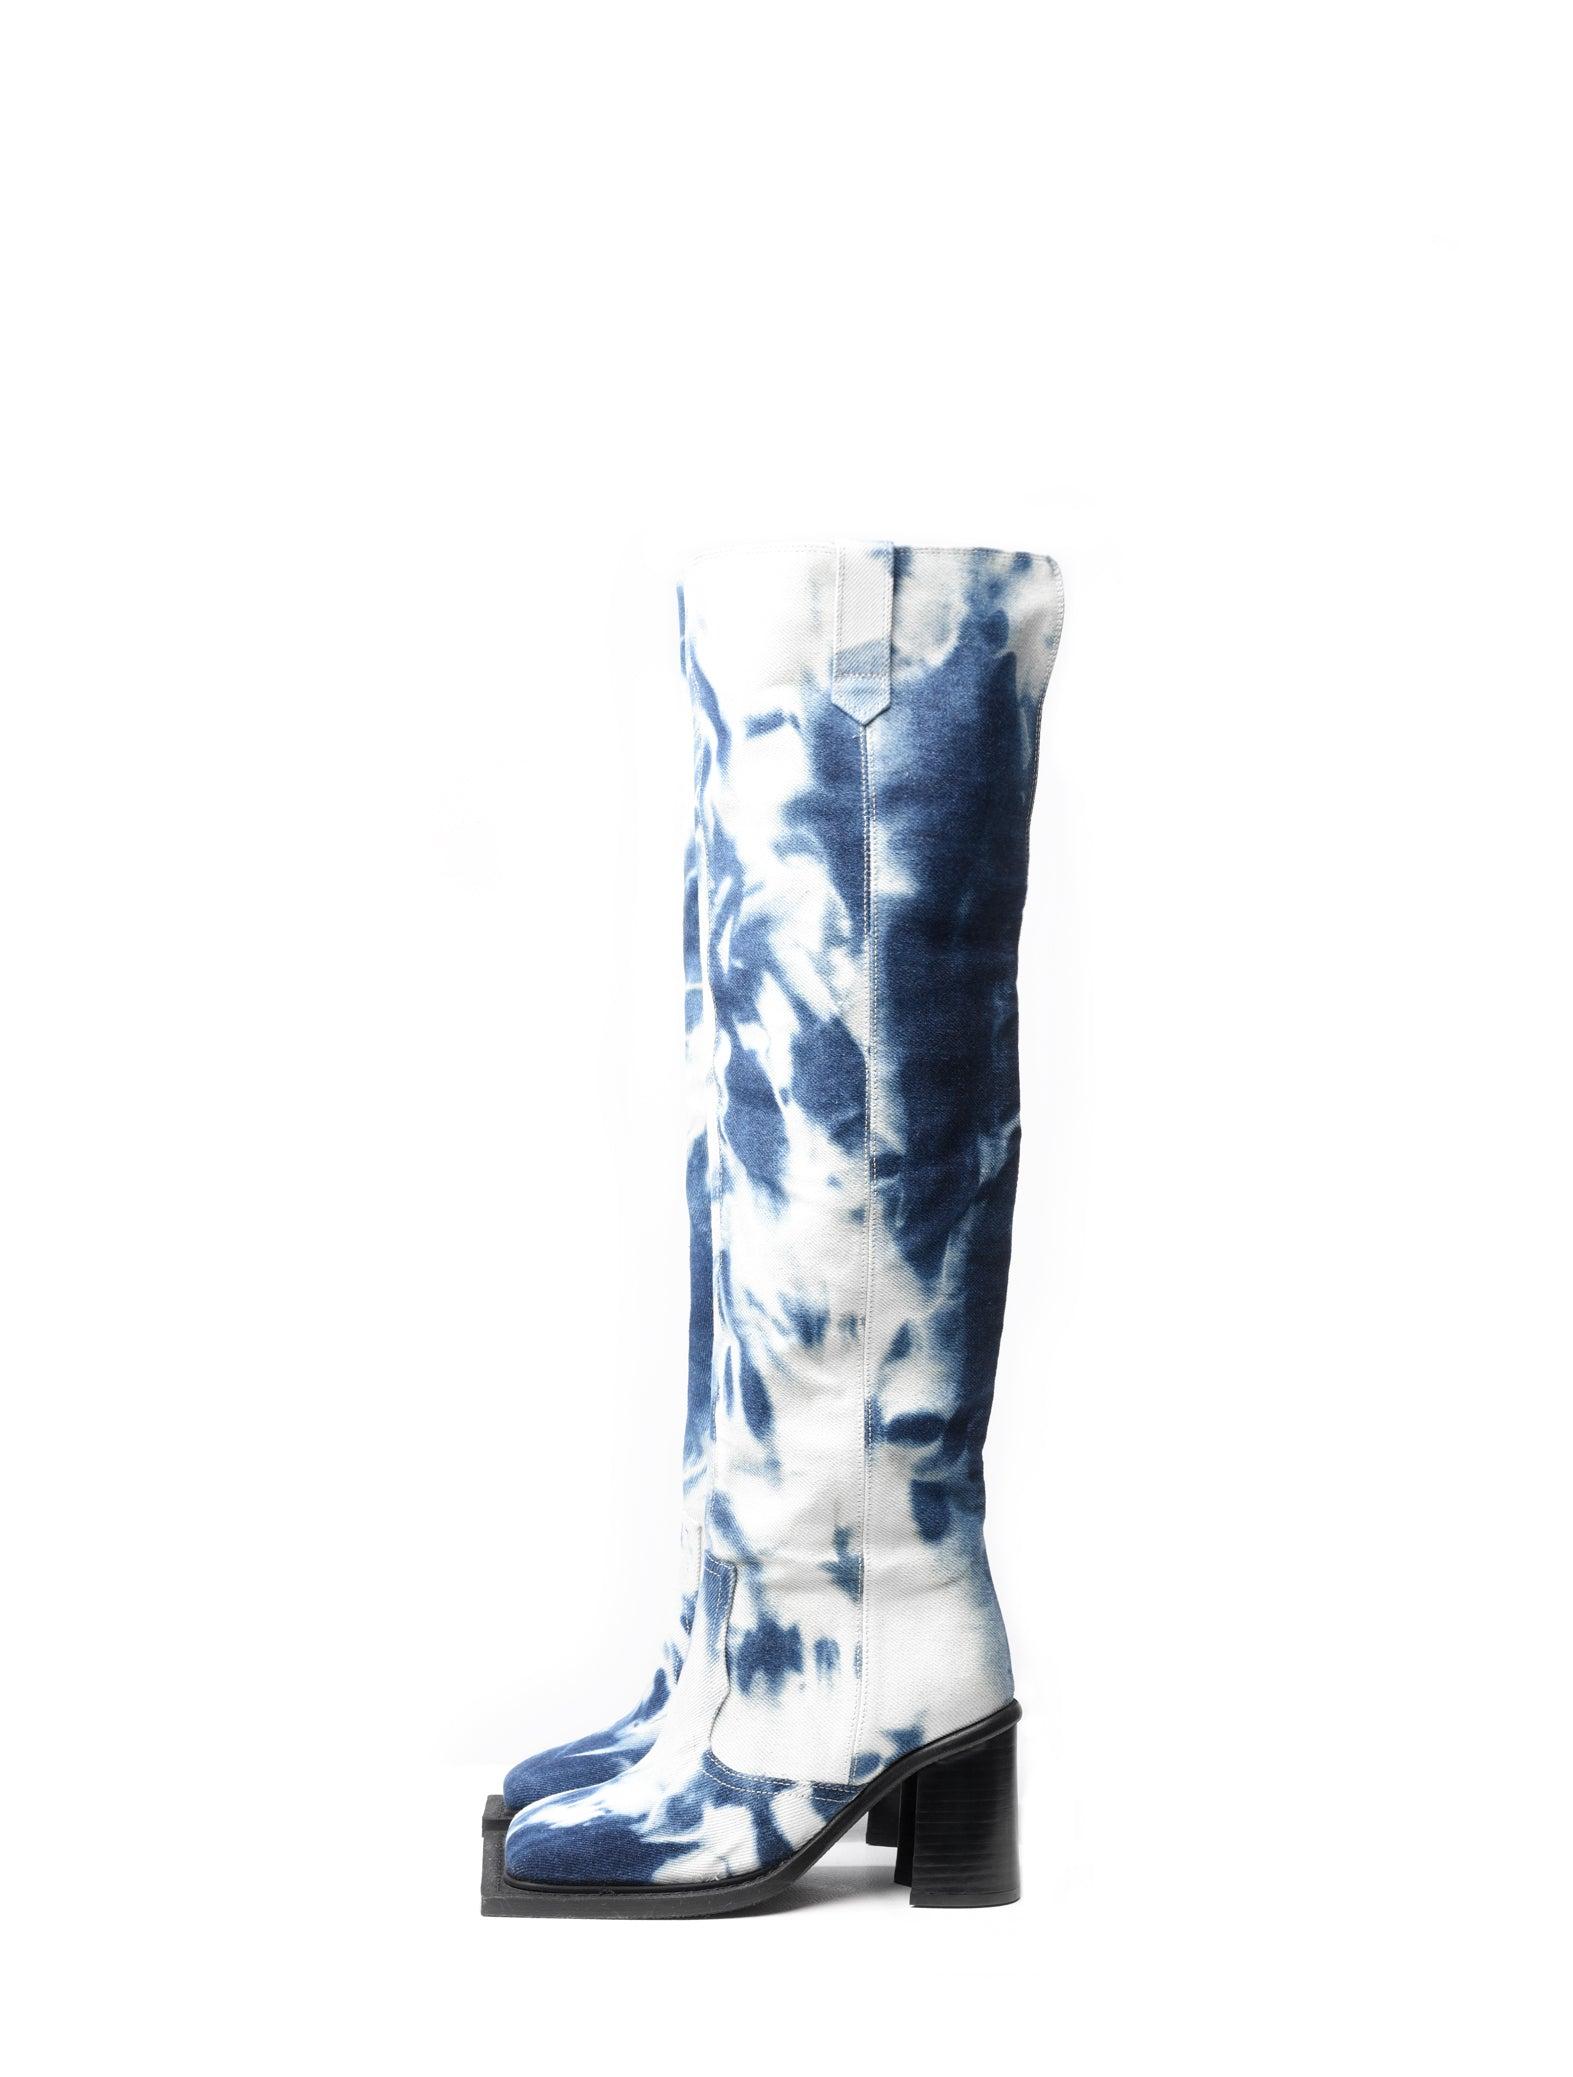 Ninamounah Howling Tie Dye Boots in Blue | Lyst